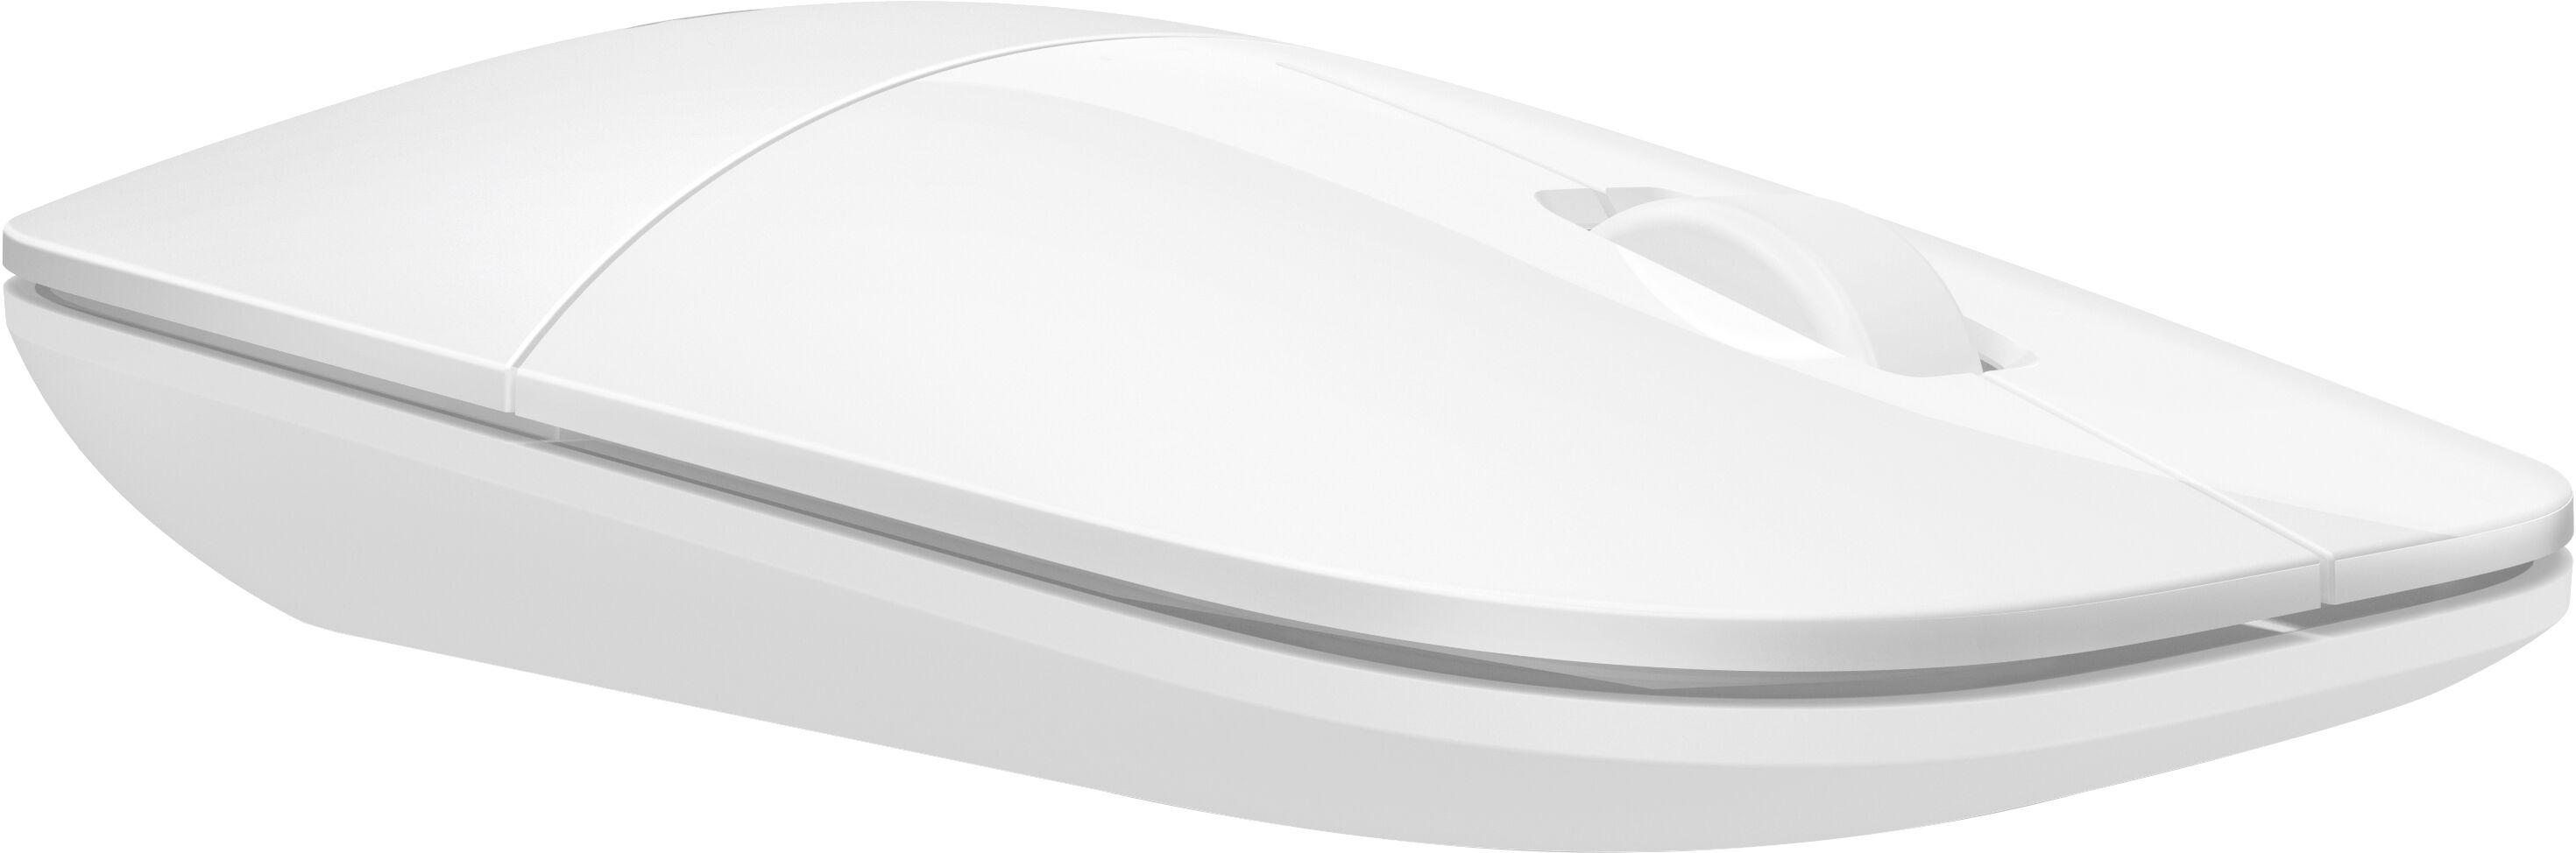 hp mouse wireless z3700 white vol80aa